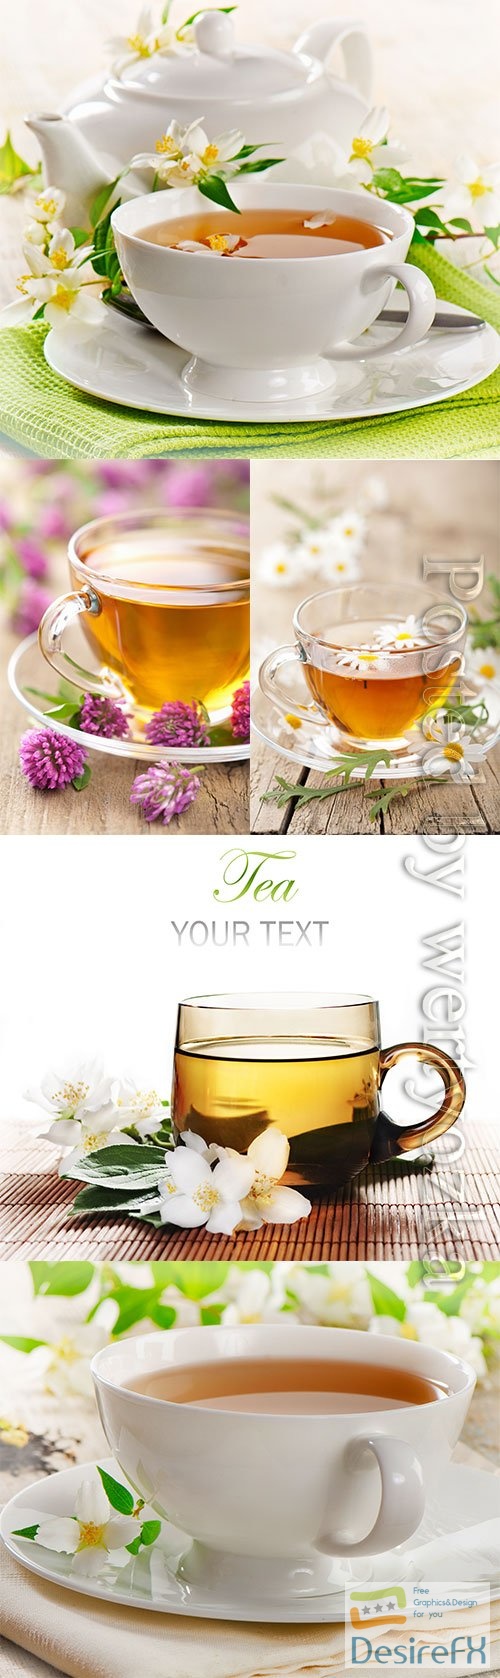 Fruit berry tea stock photo